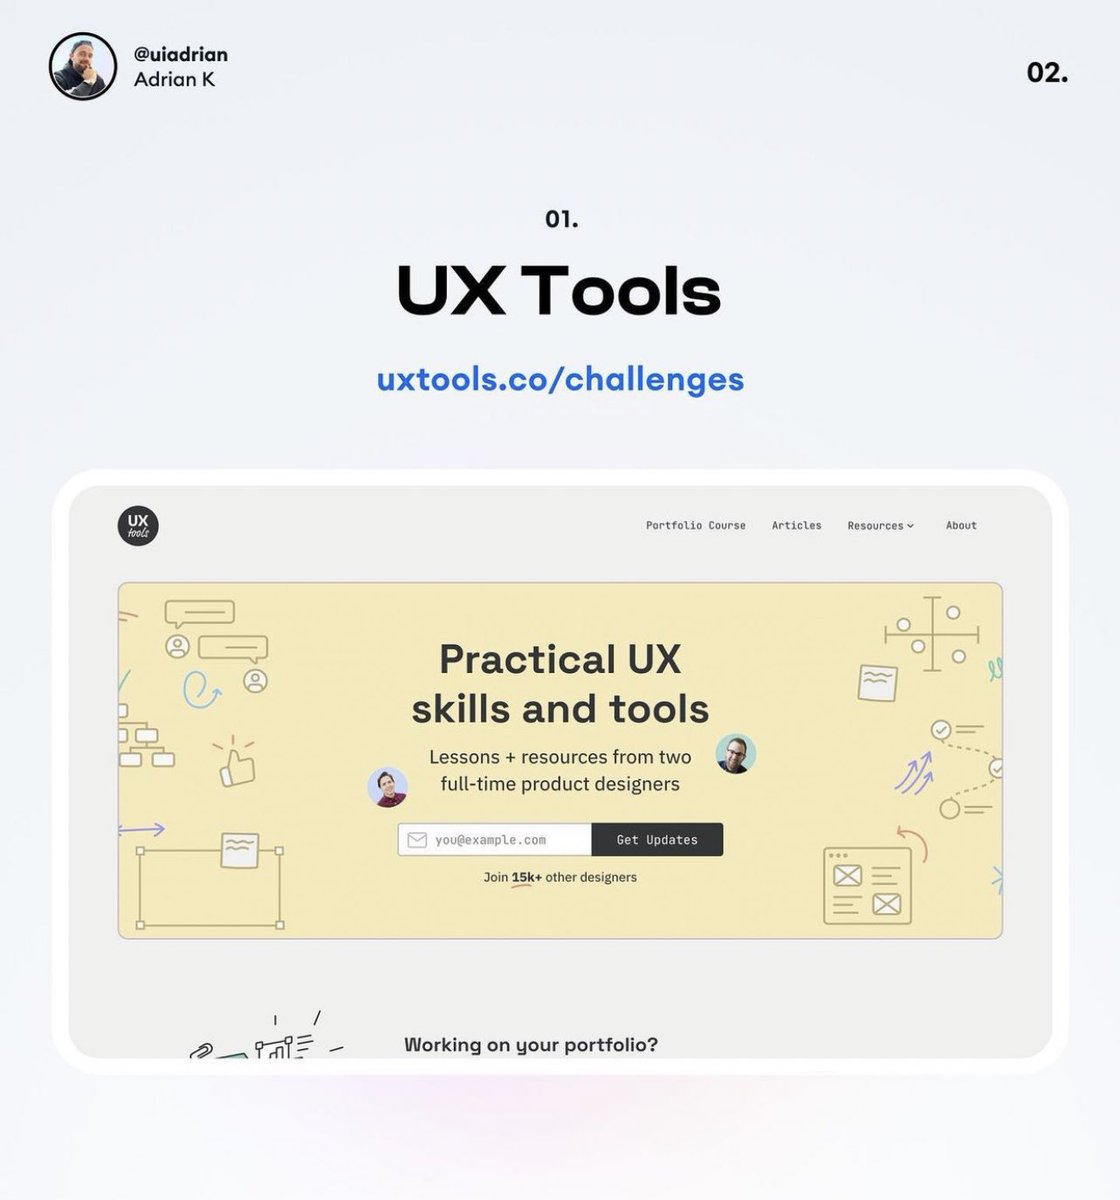 UXTools - uxtools.co/challenges